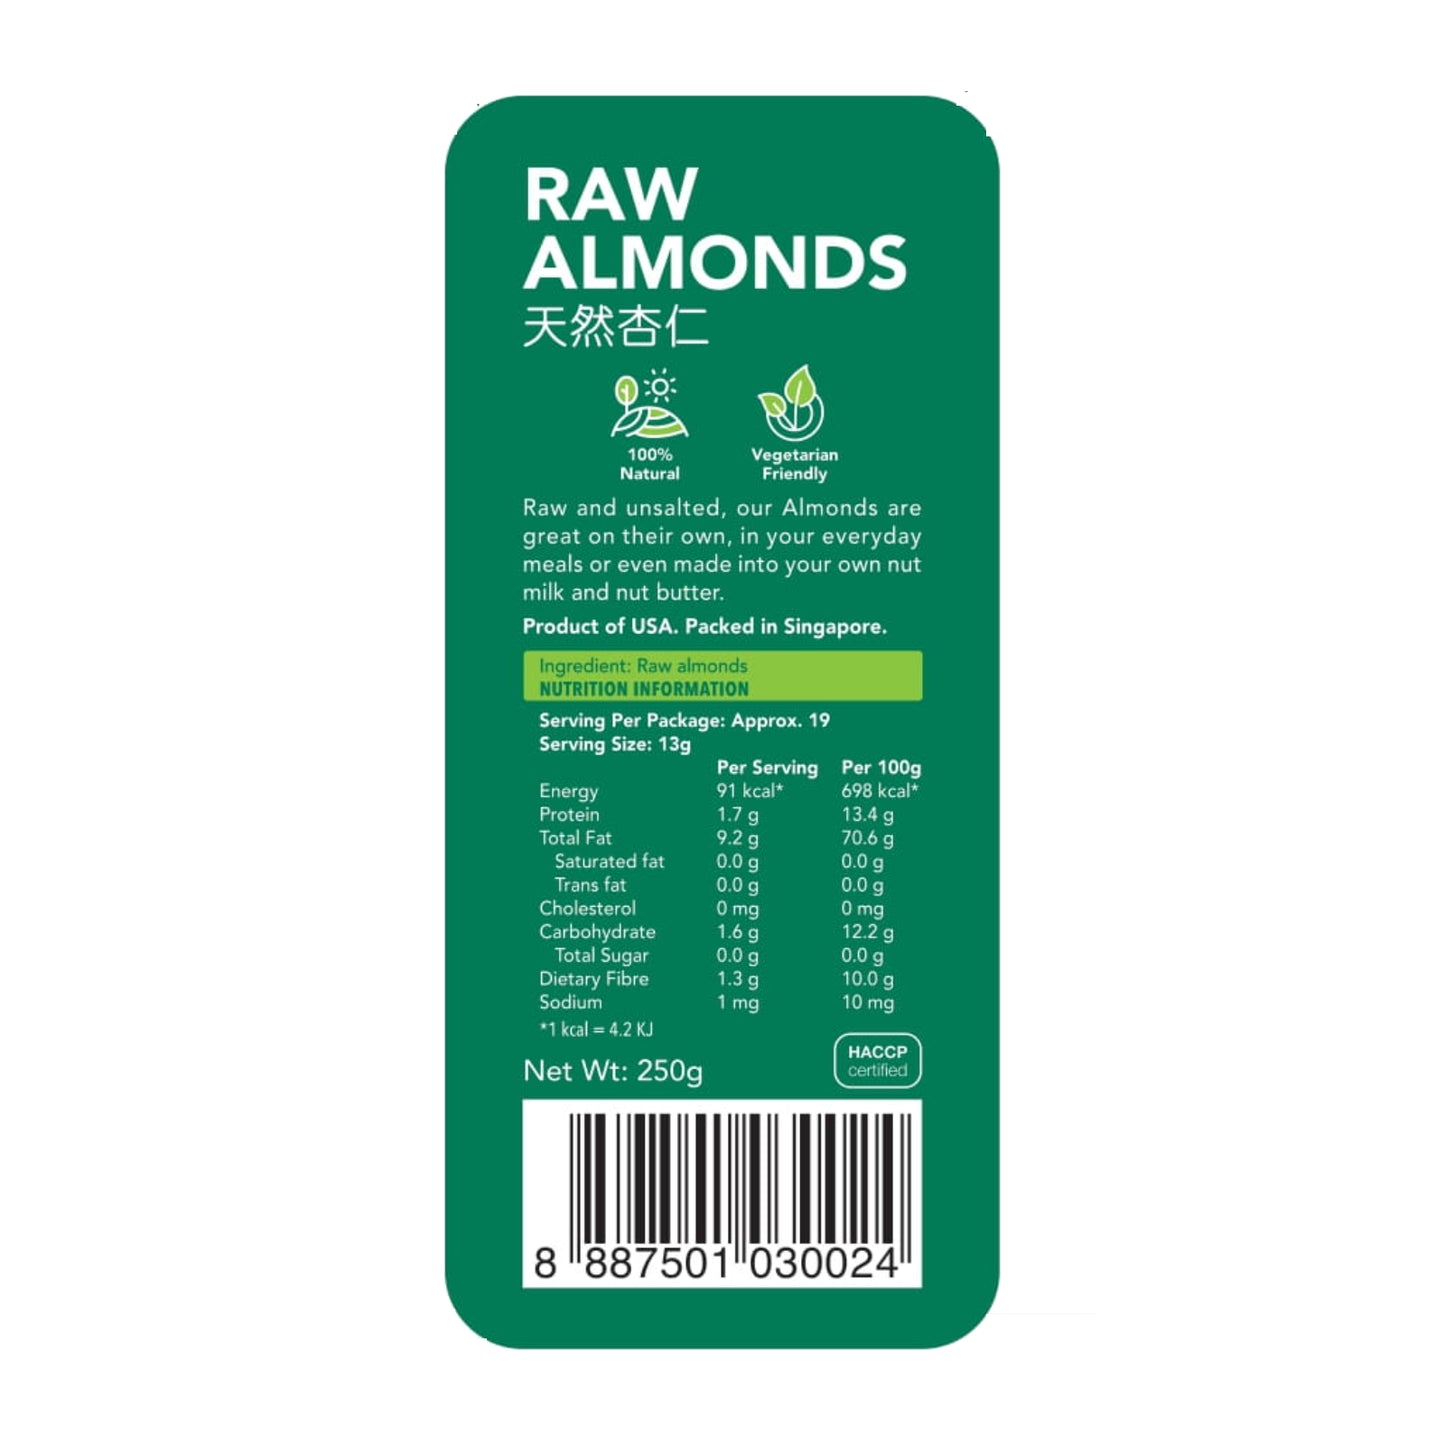 Origins Health Food Raw Almond Nuts USA 250G - Bloom Concept